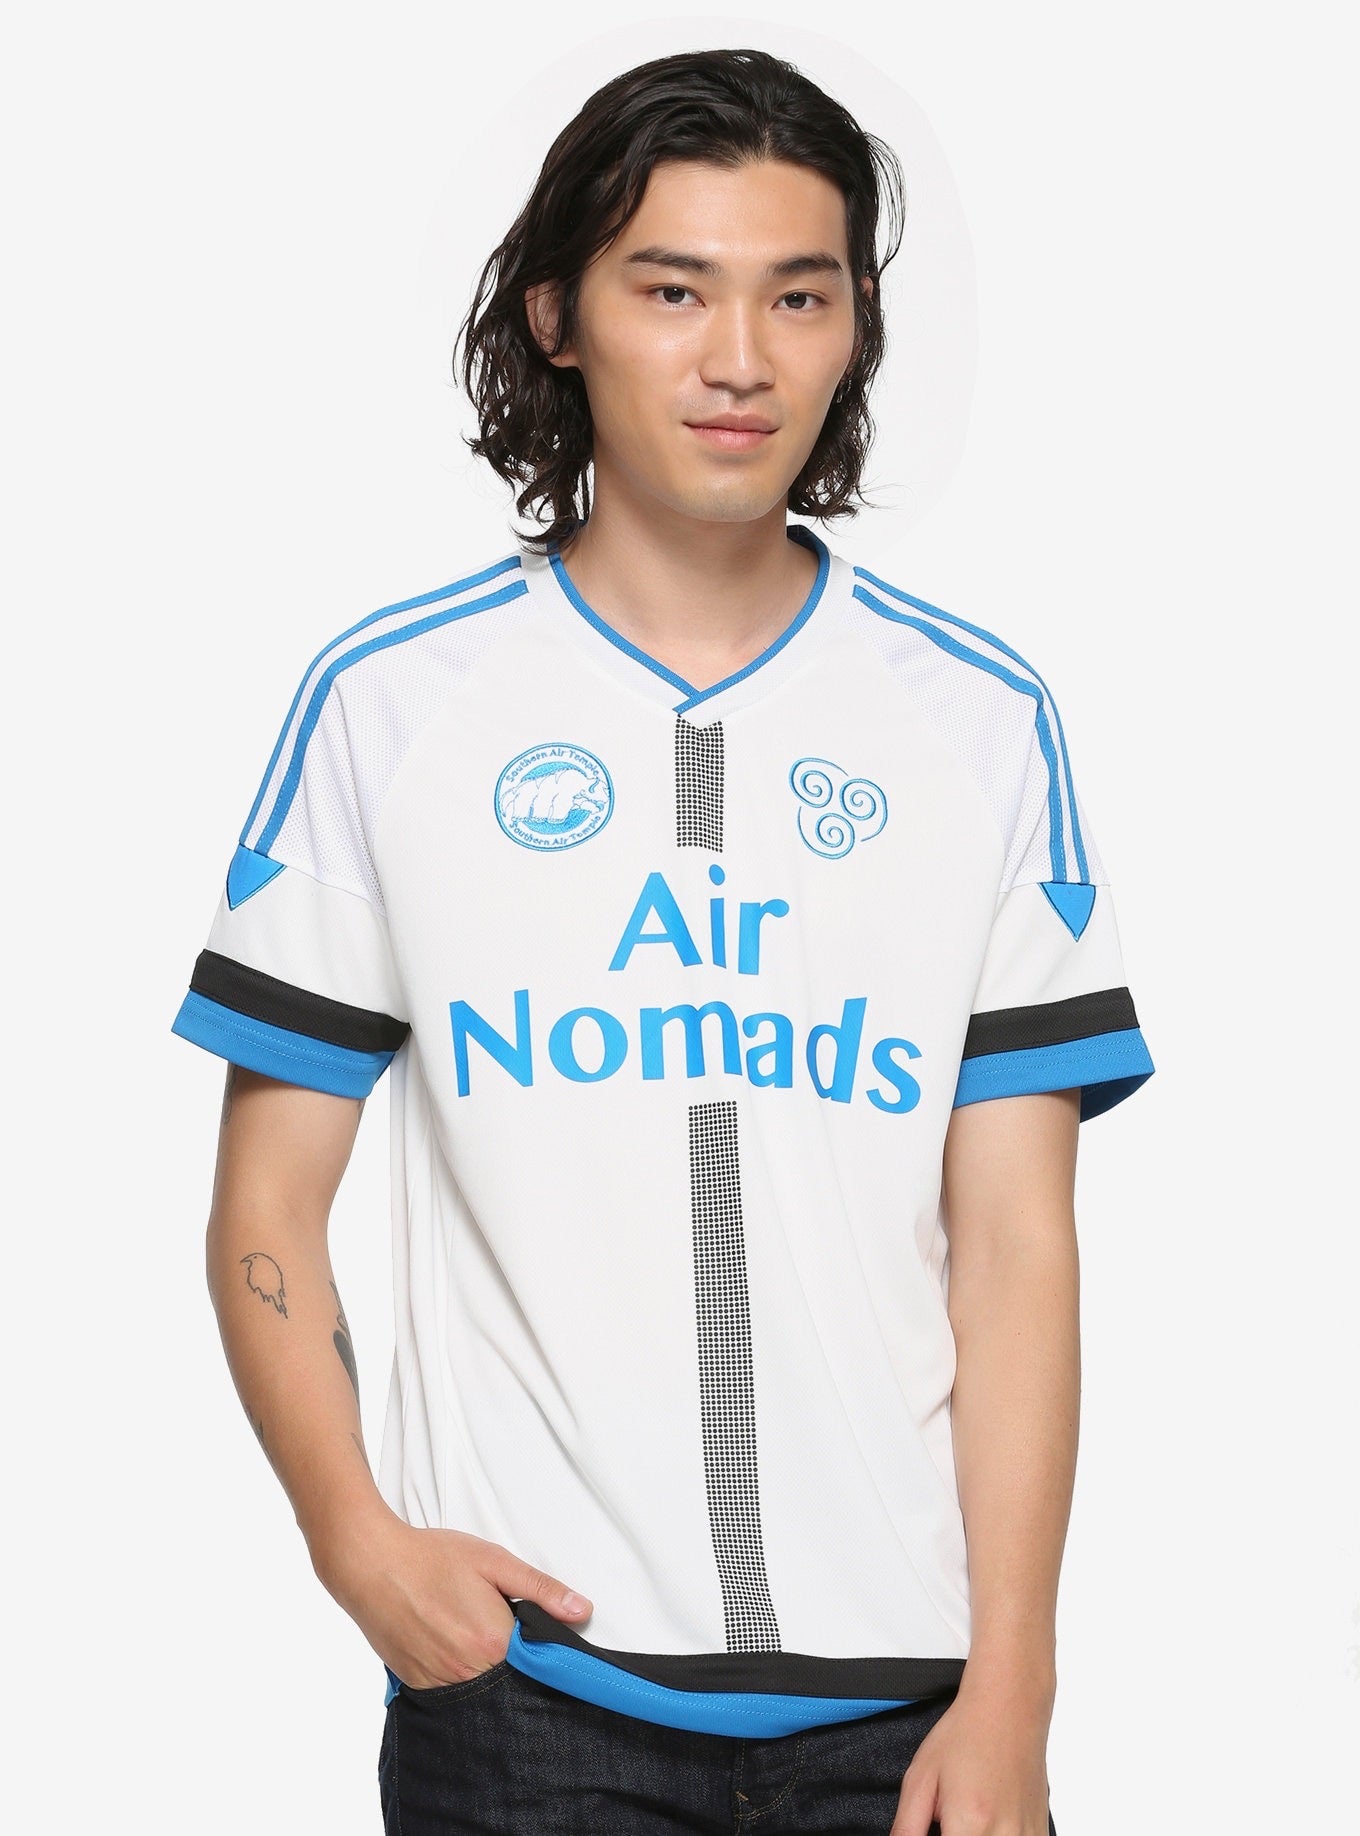 Avatar Jersey Camisa Nómadas del Aire